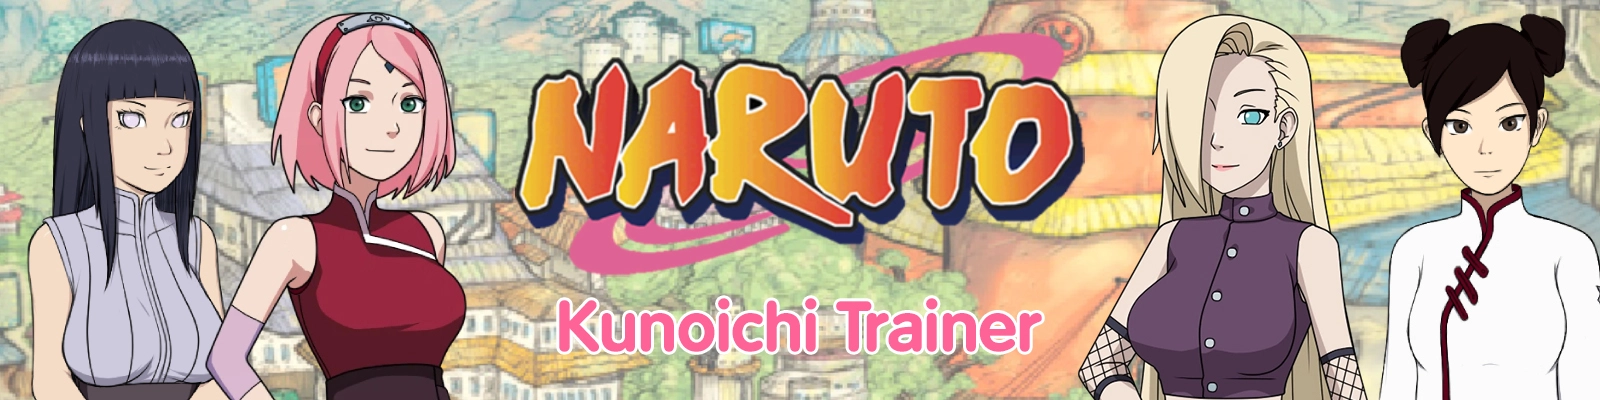 Naruto: Kunoichi Trainer [v0.12.3] main image